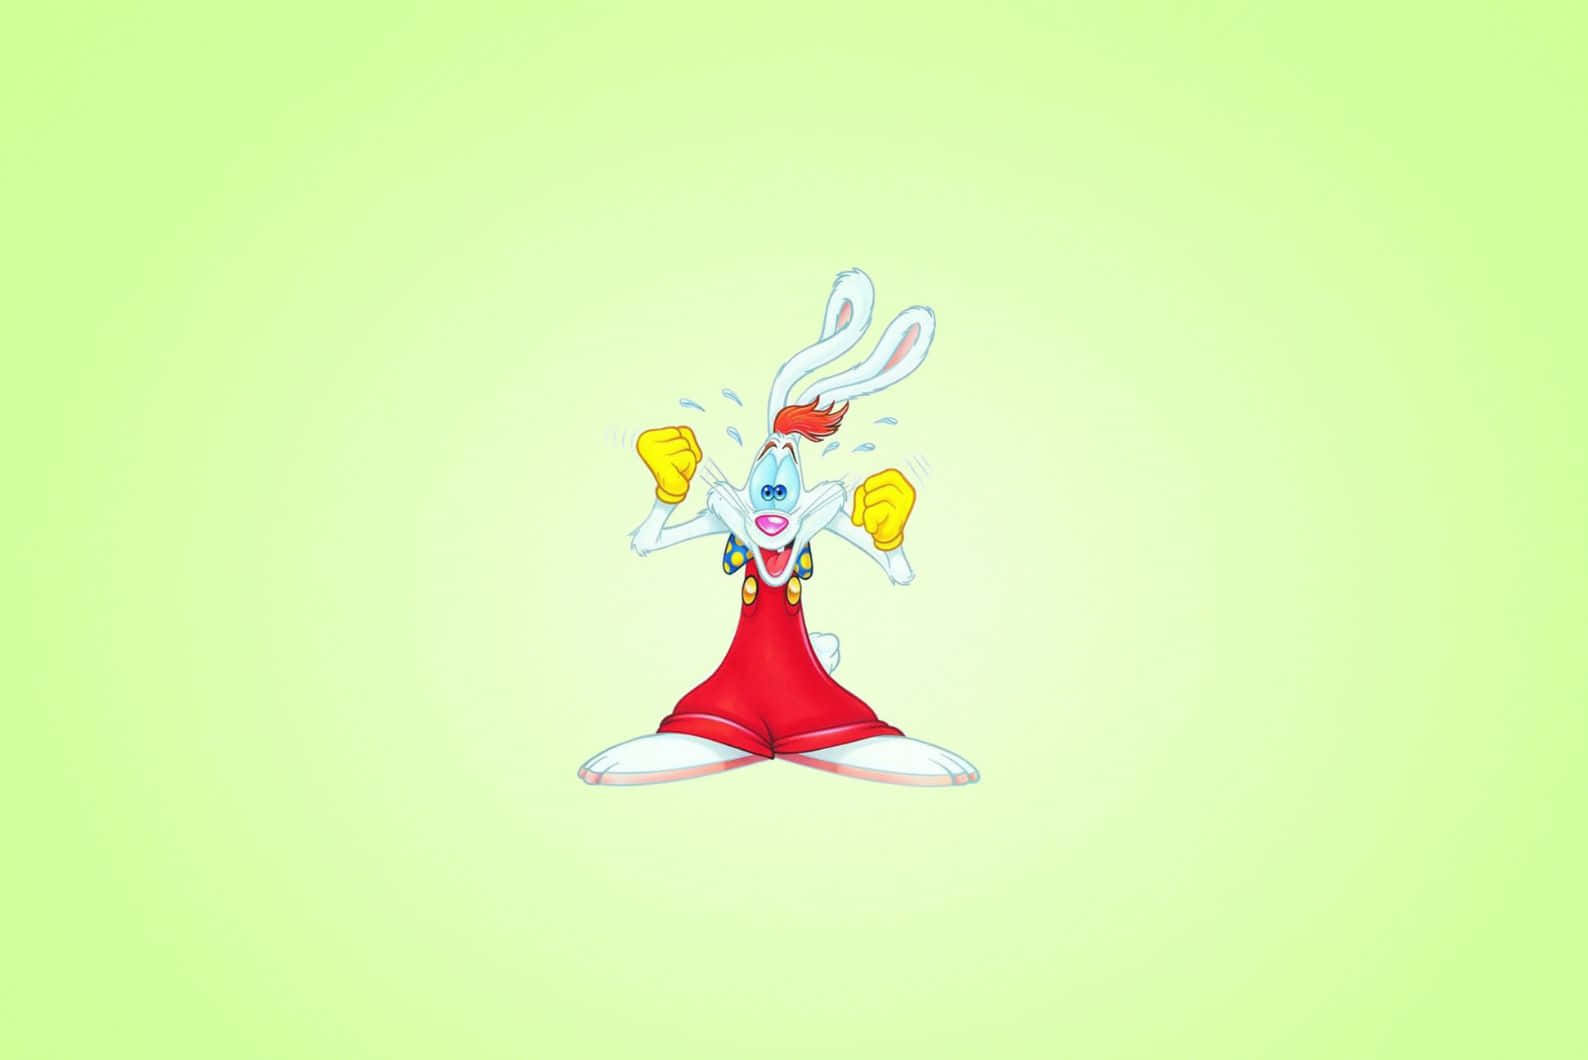 Excited Roger Rabbit Cartoon